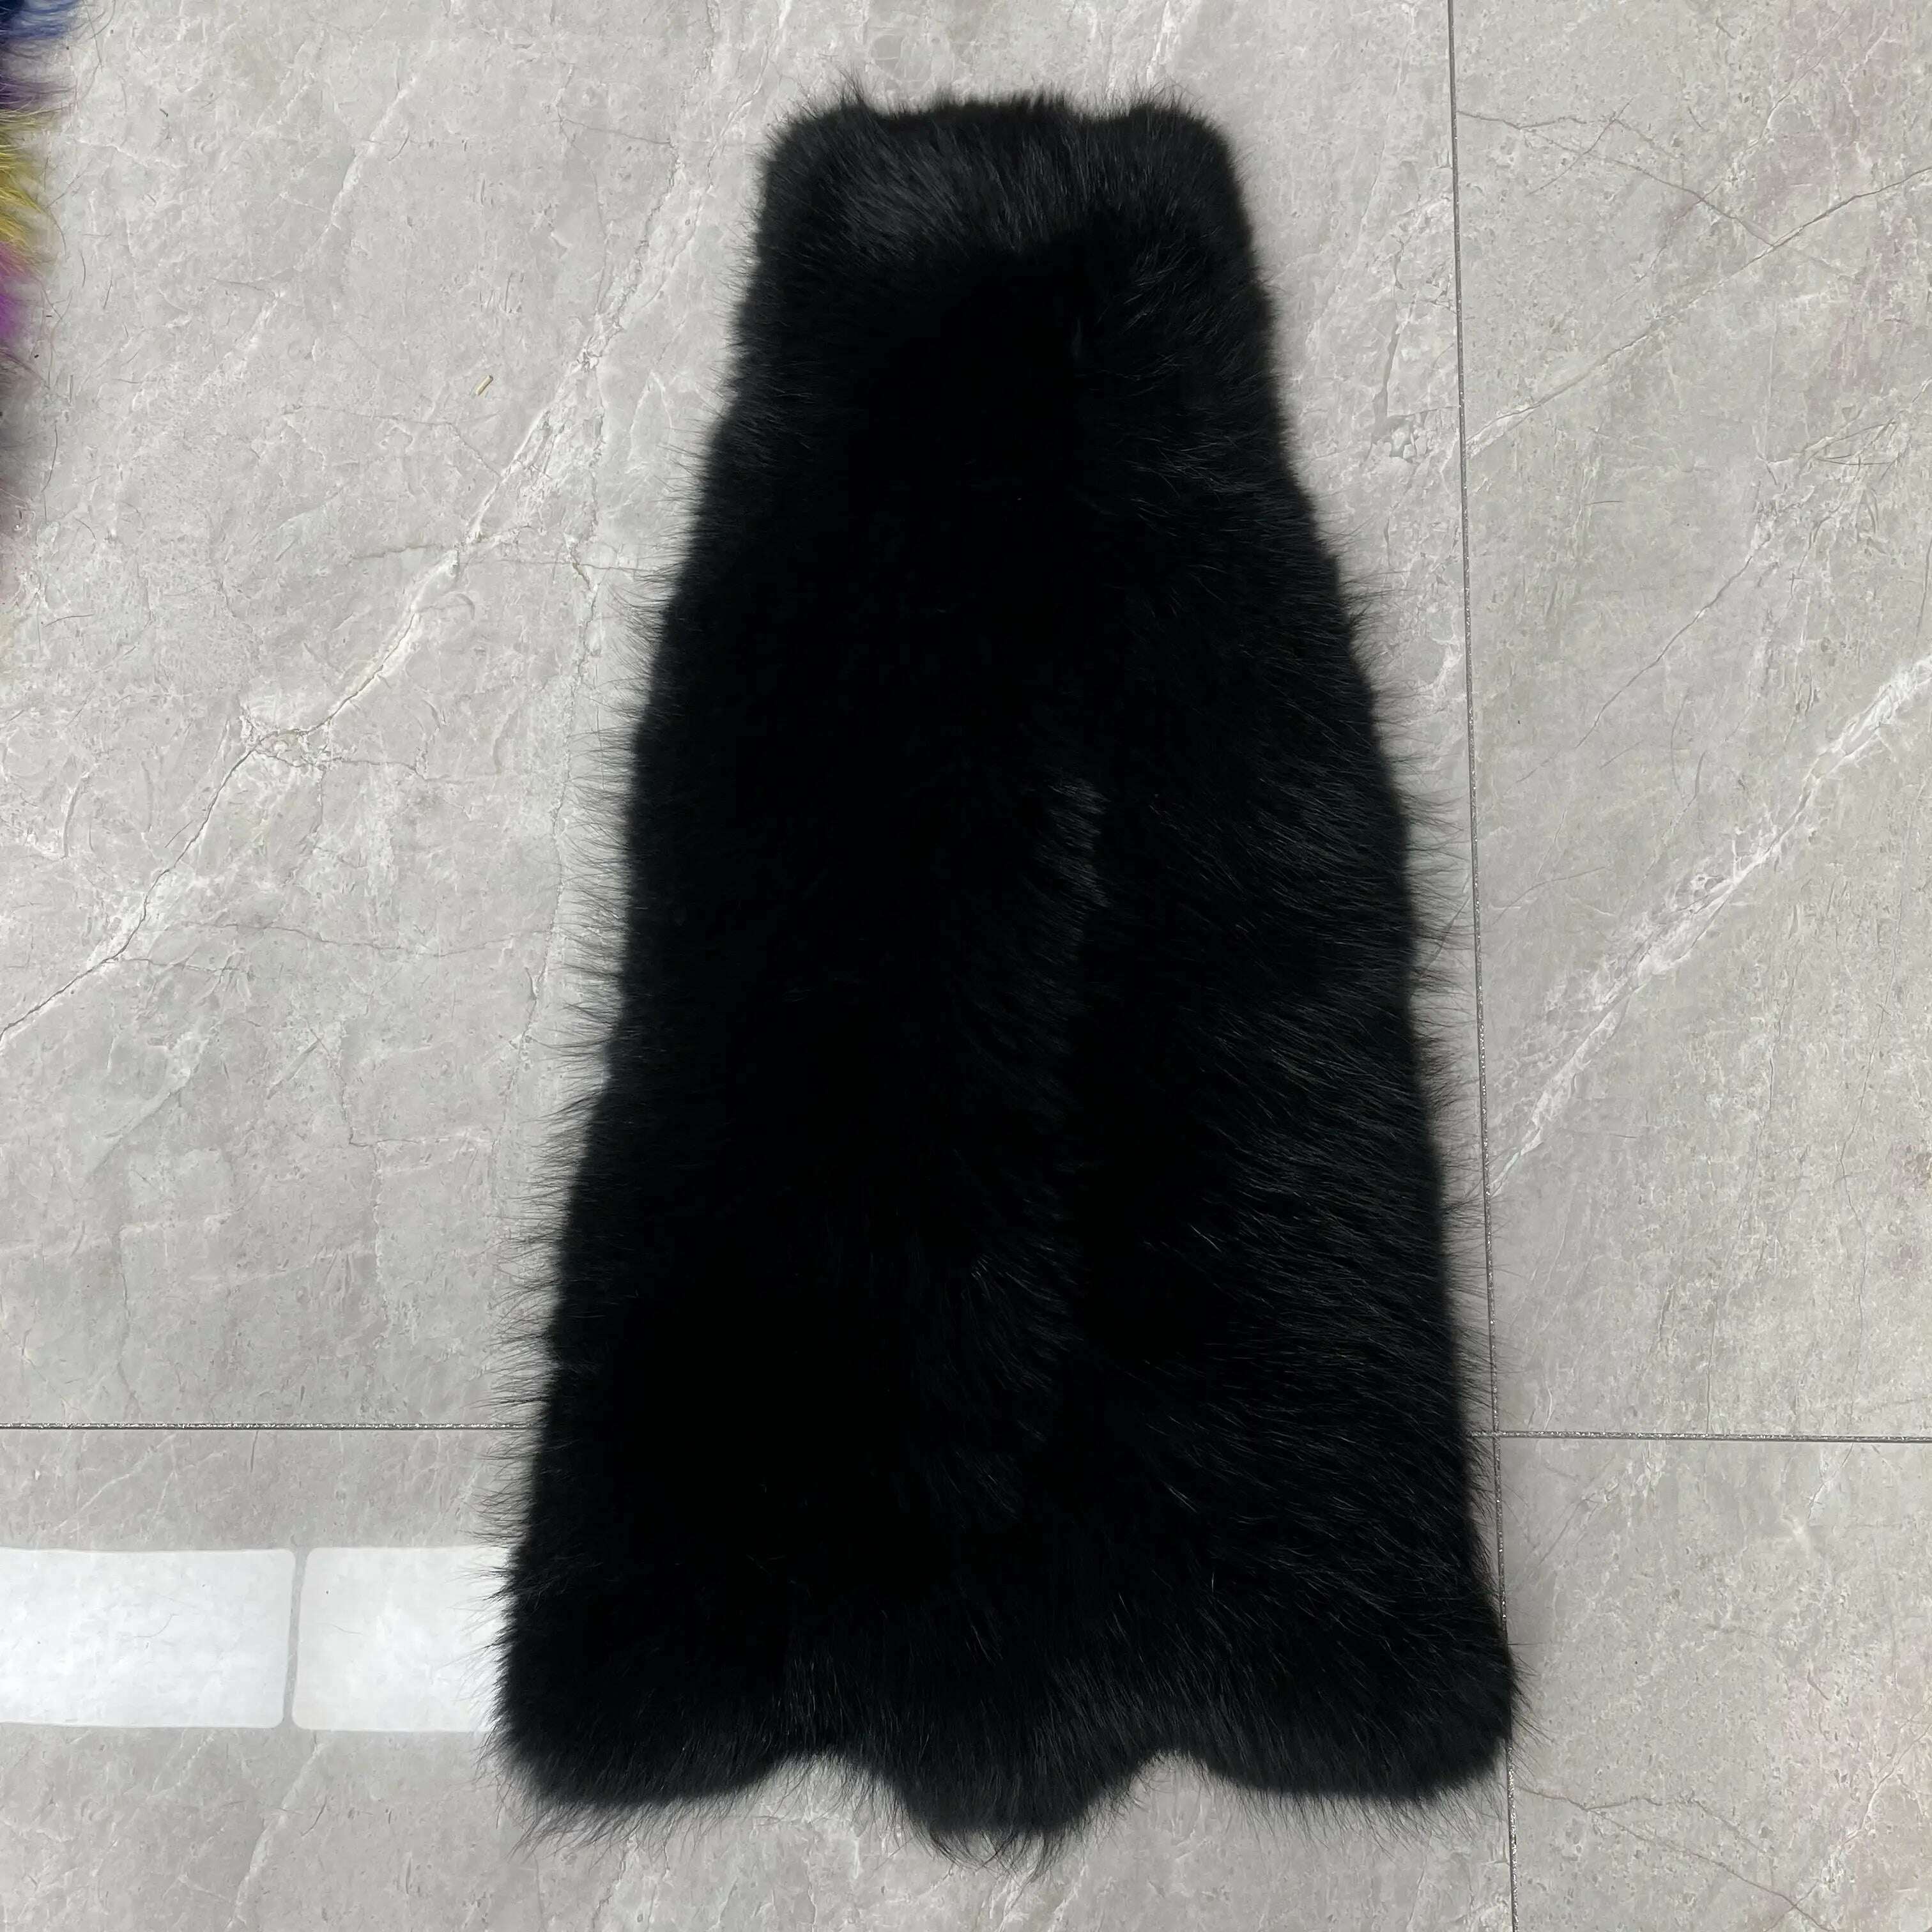 KIMLUD, Real Raccoon Fur Jacket Men Fashion Coat Winter Warm Long Style, Black / XS(88cm), KIMLUD Women's Clothes